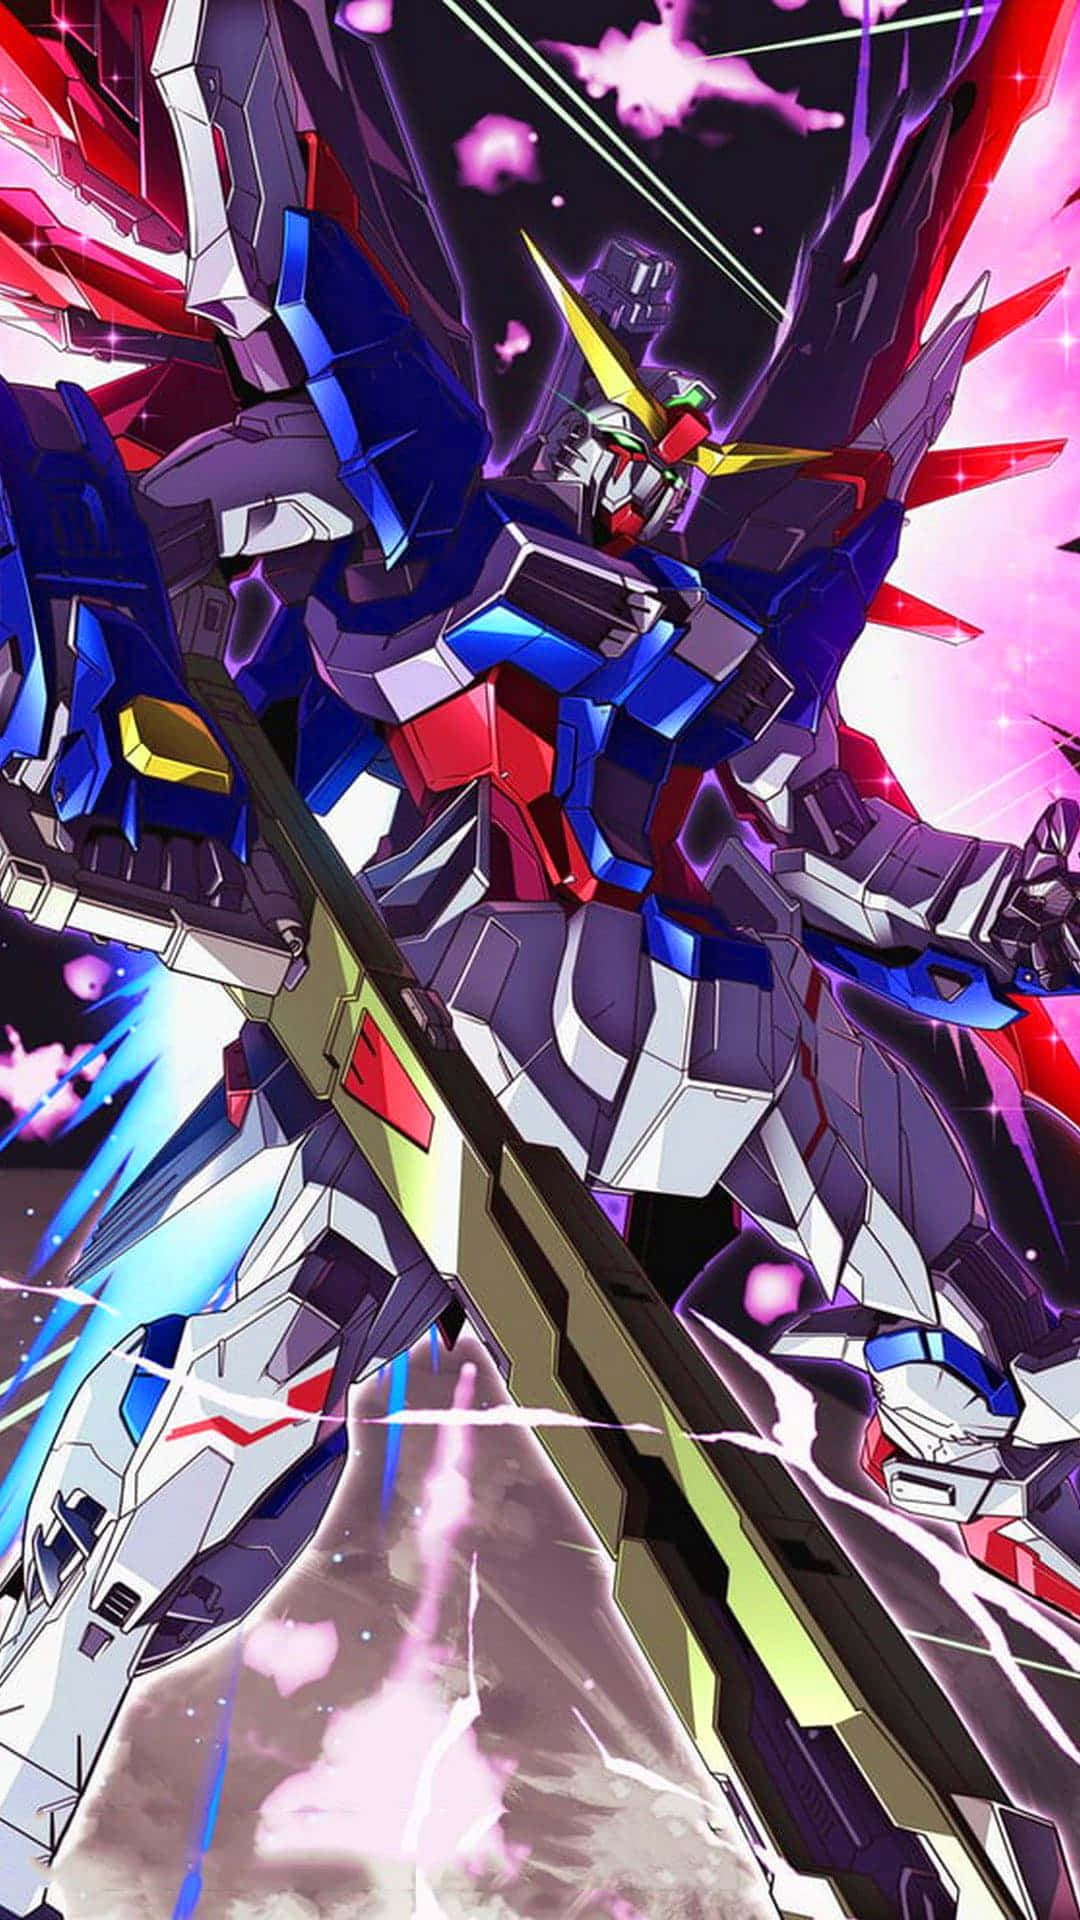 Redoför Strid - Mobile Suit Gundam